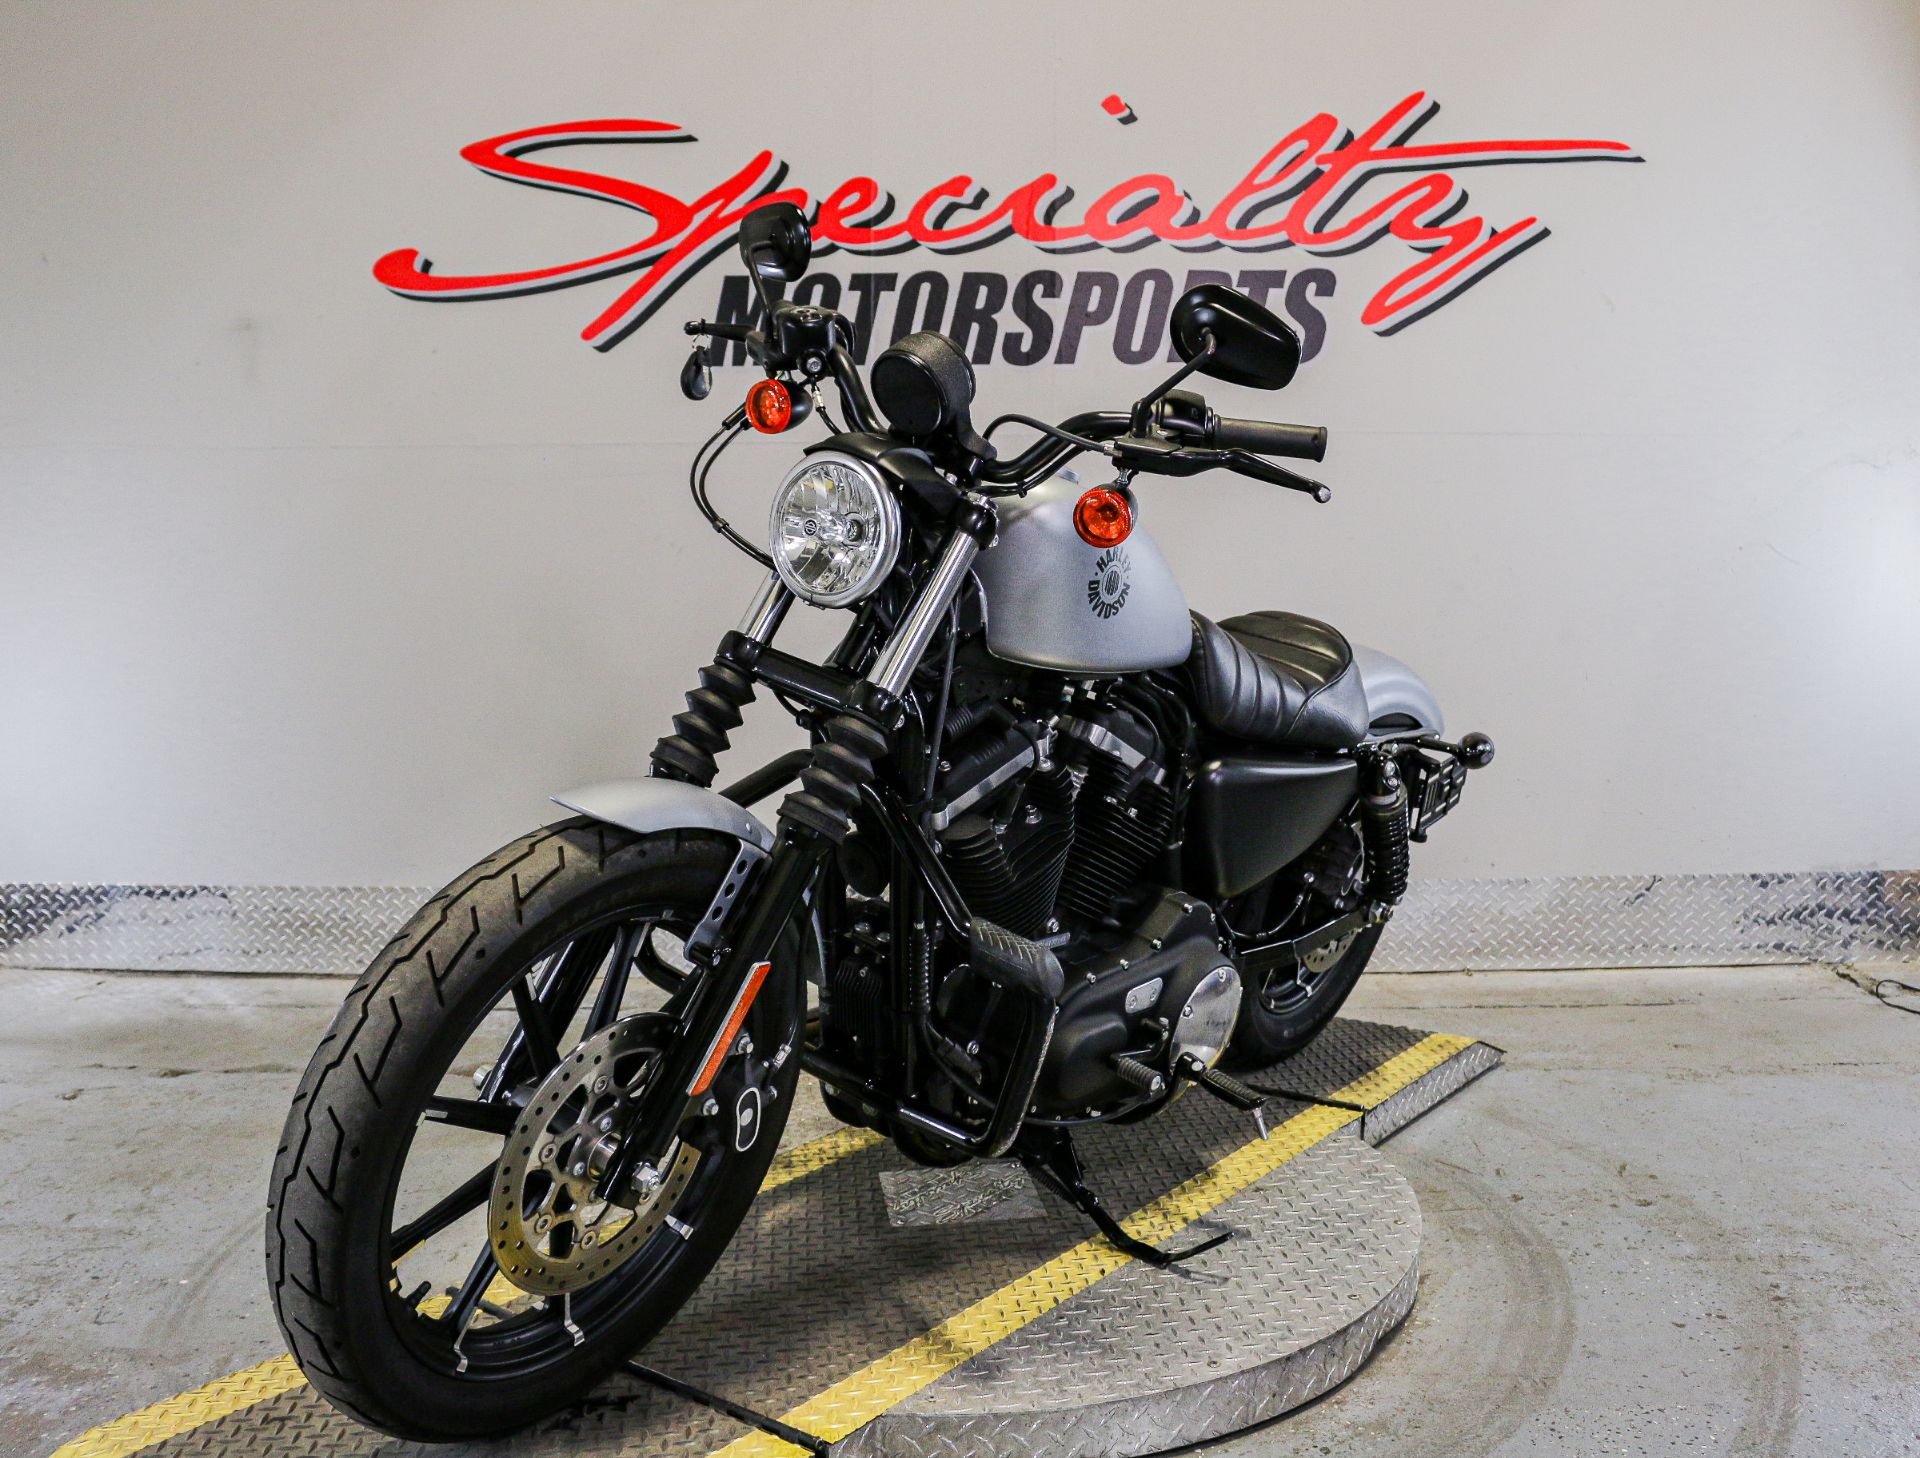 2020 Harley-Davidson Iron 883™ in Sacramento, California - Photo 6